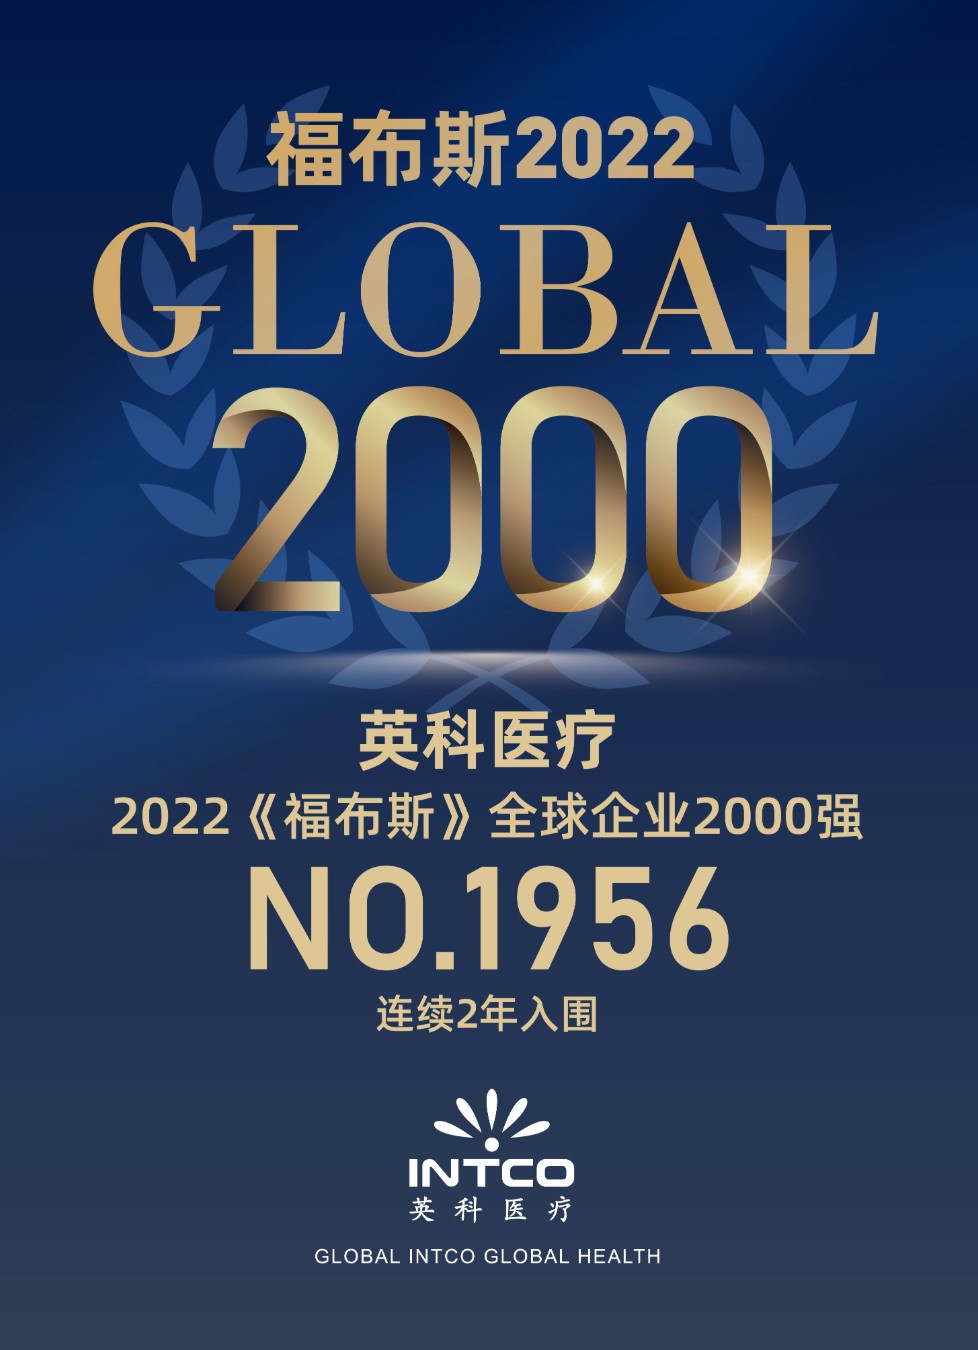 2022 Forbes Global 2000 Companies